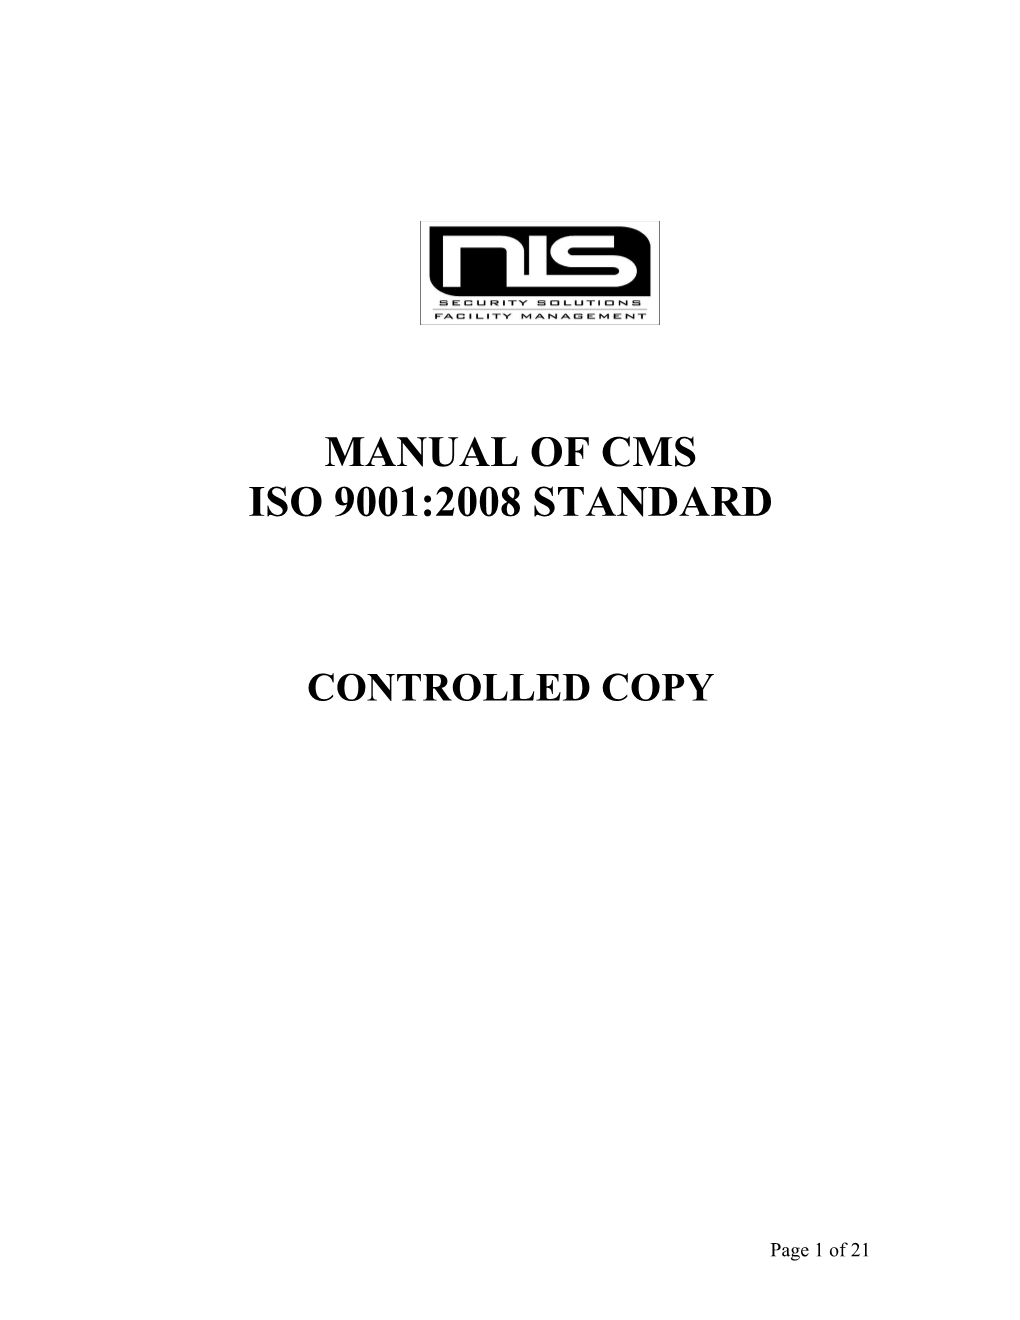 Manual of Cms (Complaint Management System)